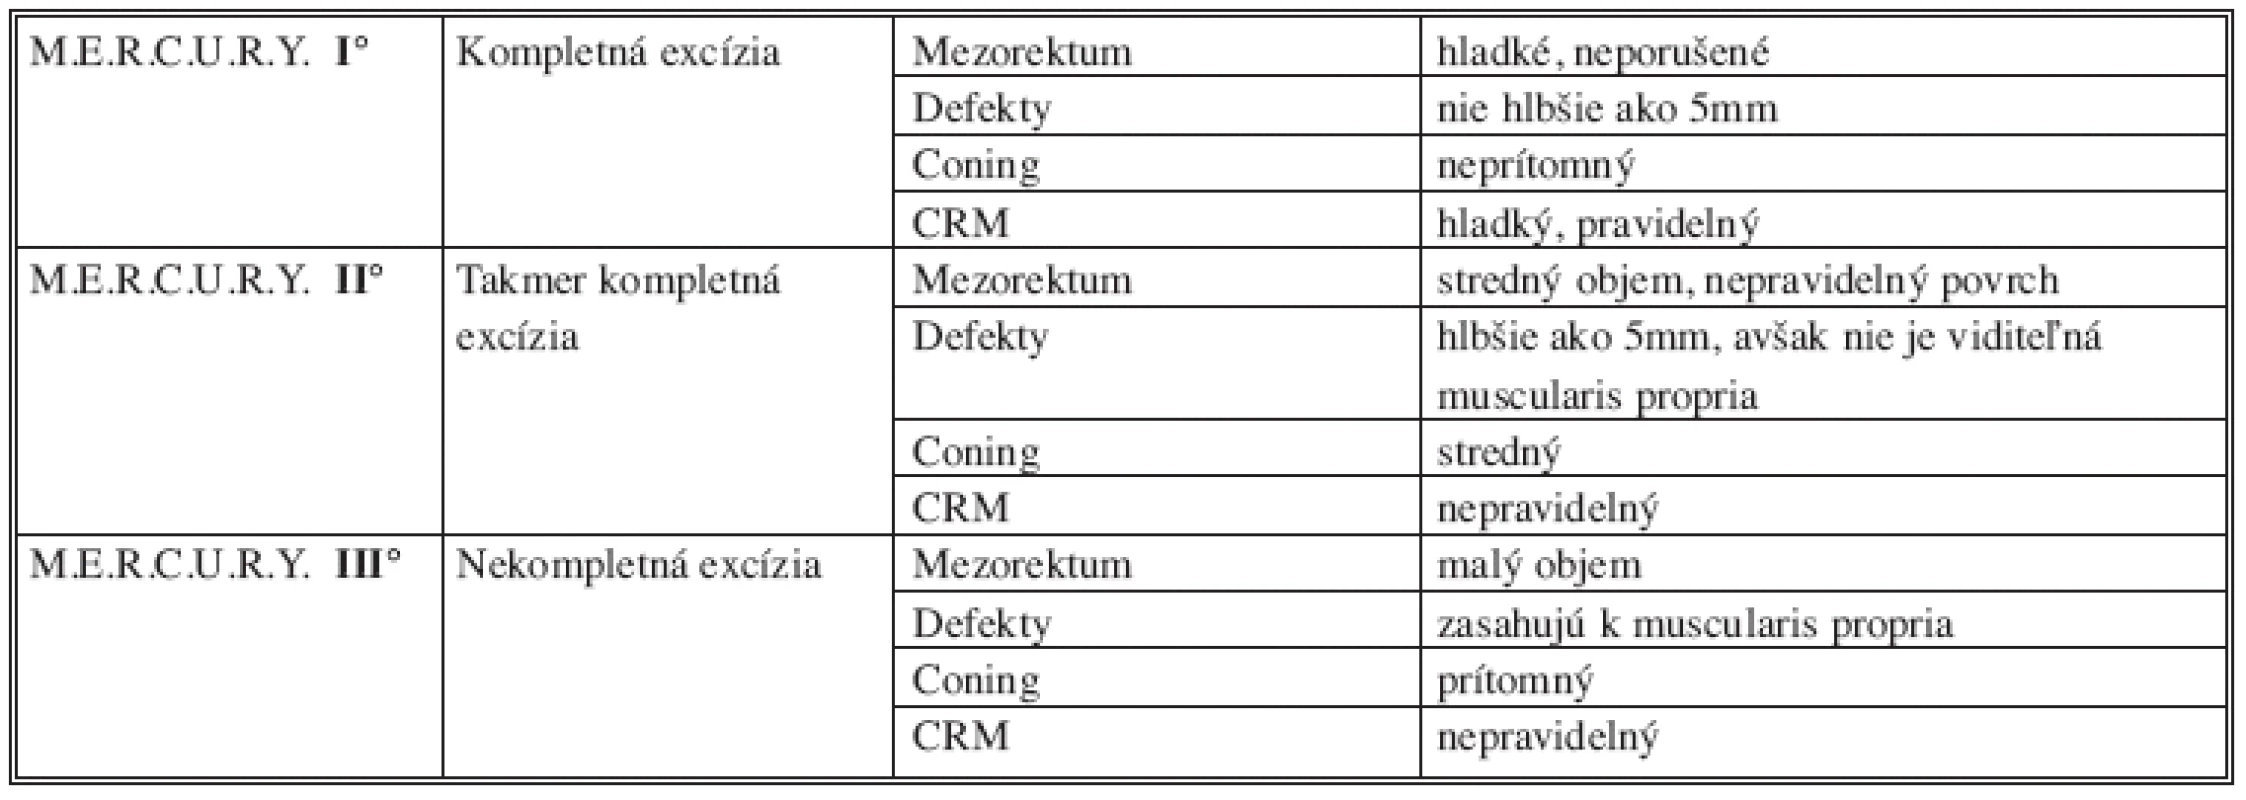 Klasifikácia kvality mezorektálnej excízie podľa M.E.R.C.U.R.Y. kritérií
Tab. 1: Classification of mesorectal excision quality assessment according to M.E.R.C.U.R.Y. criterions